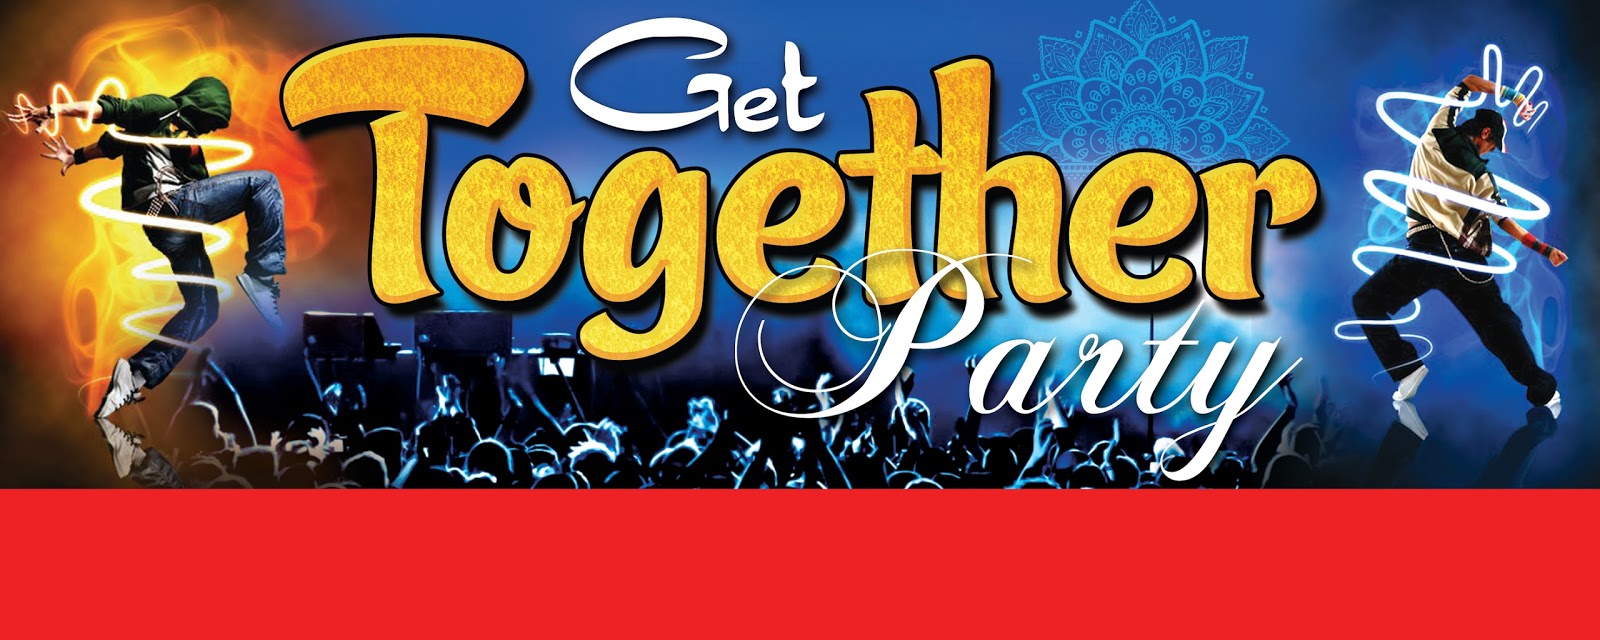 get together party flex banner psd template free downloads ... - 1600 x 640 jpeg 228kB